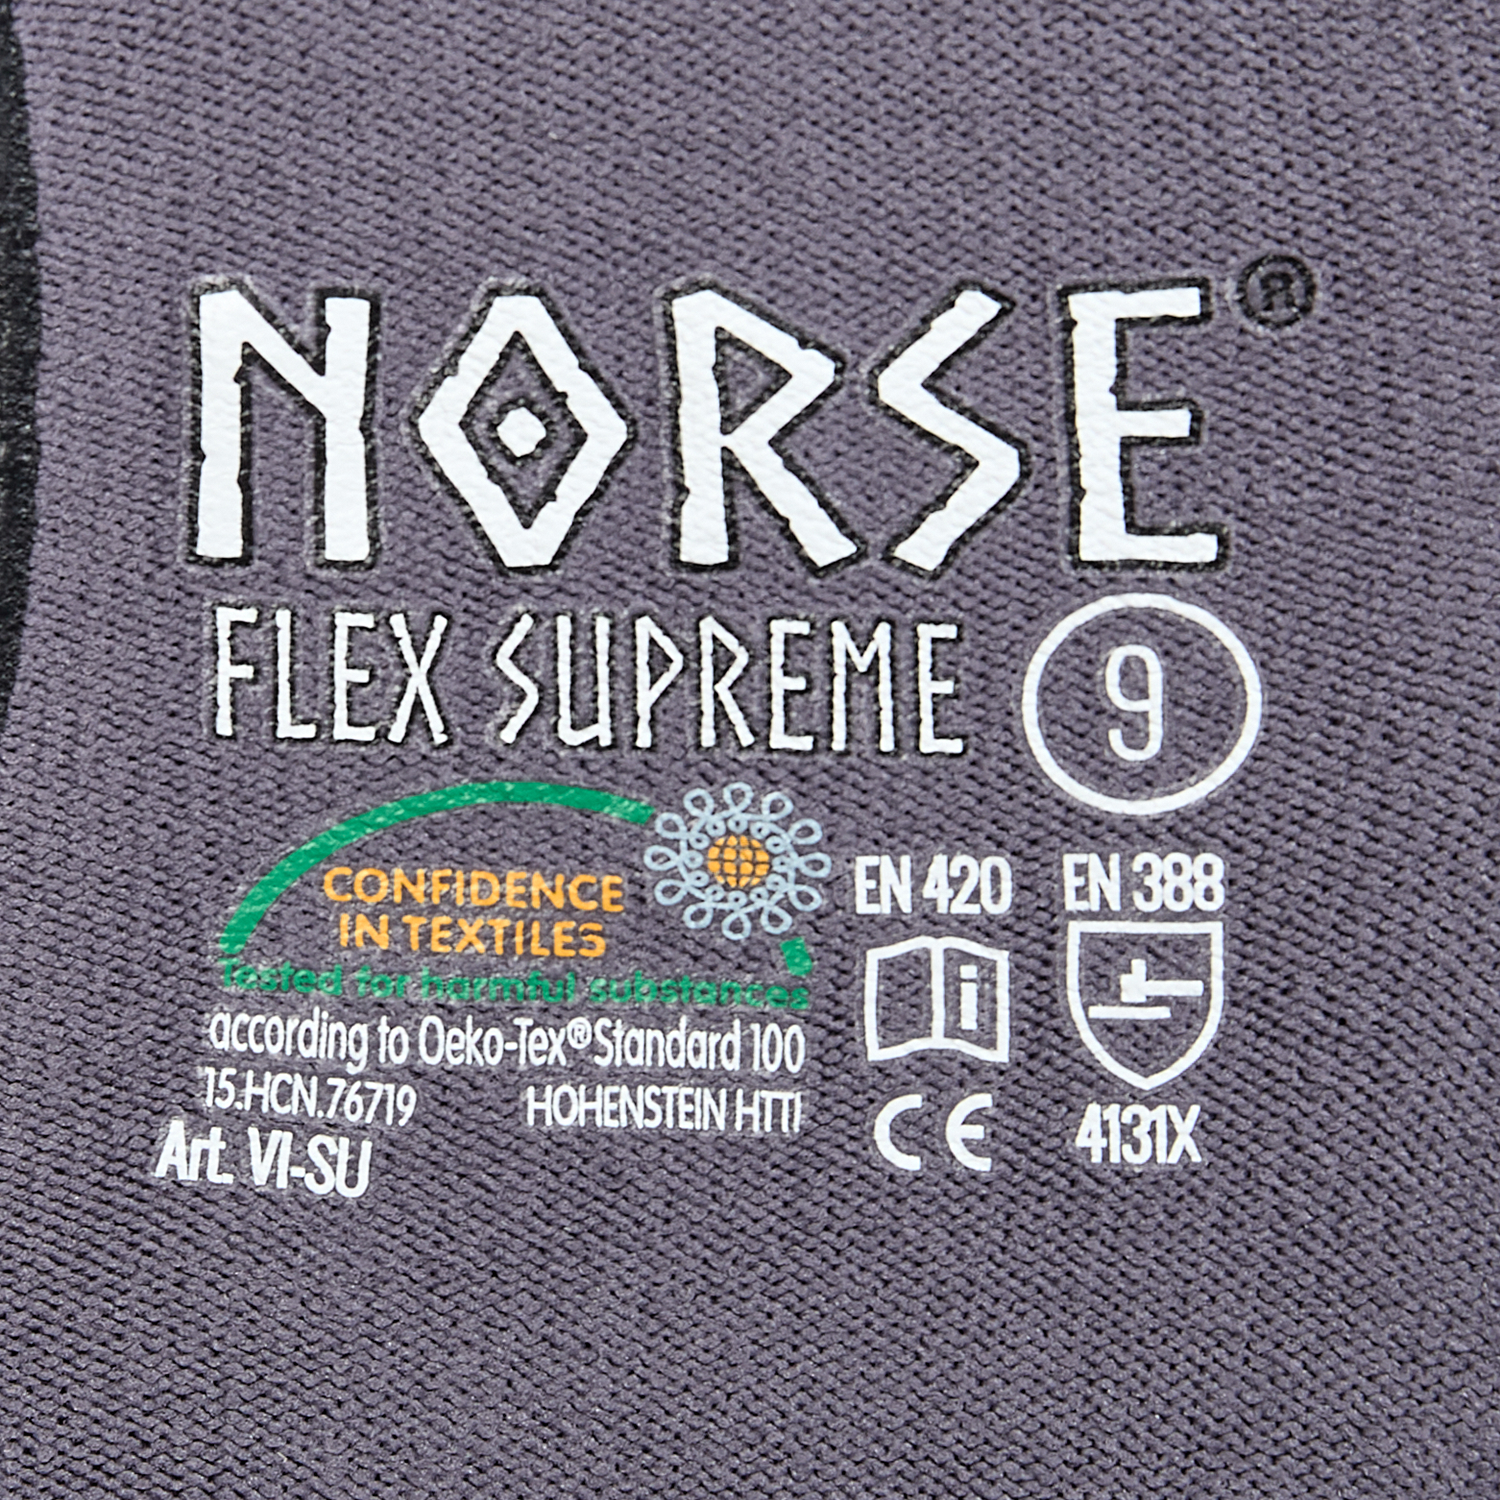 NORSE Flex Supreme assembly gloves size 11